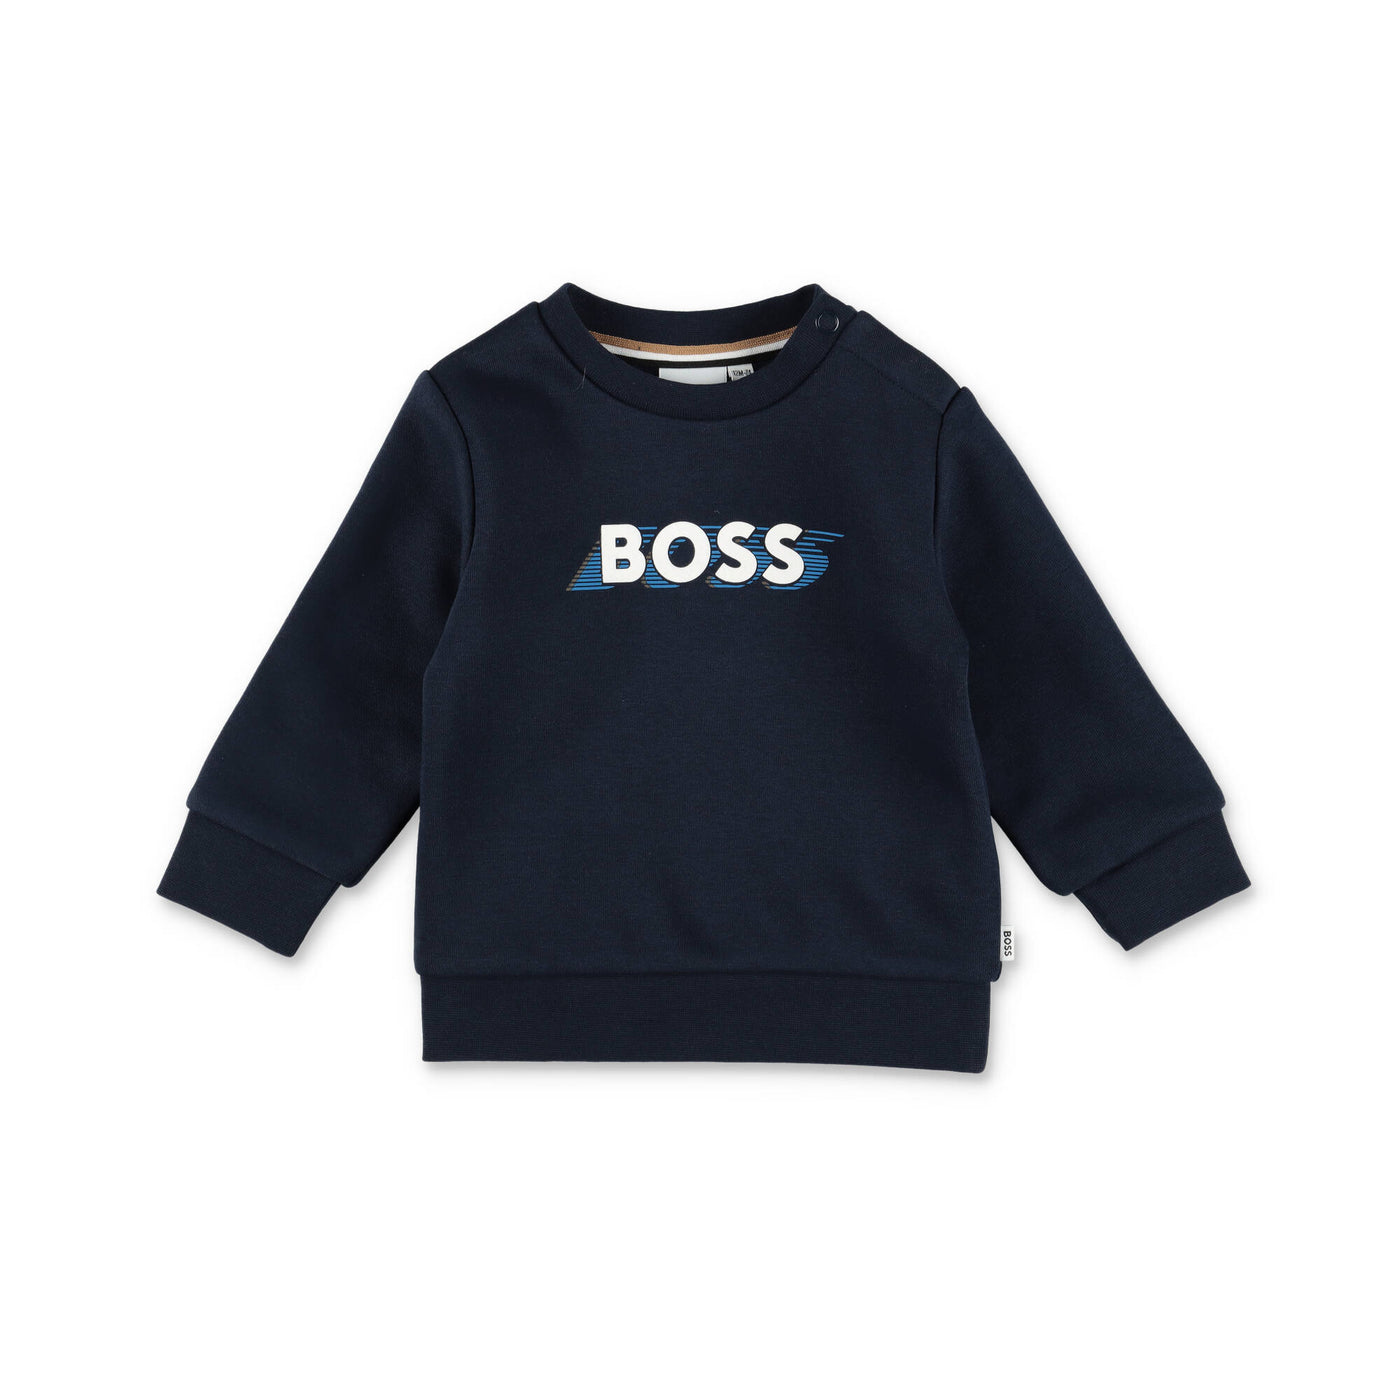 Navy blue cotton blend baby boy HUGO BOSS sweatshirt